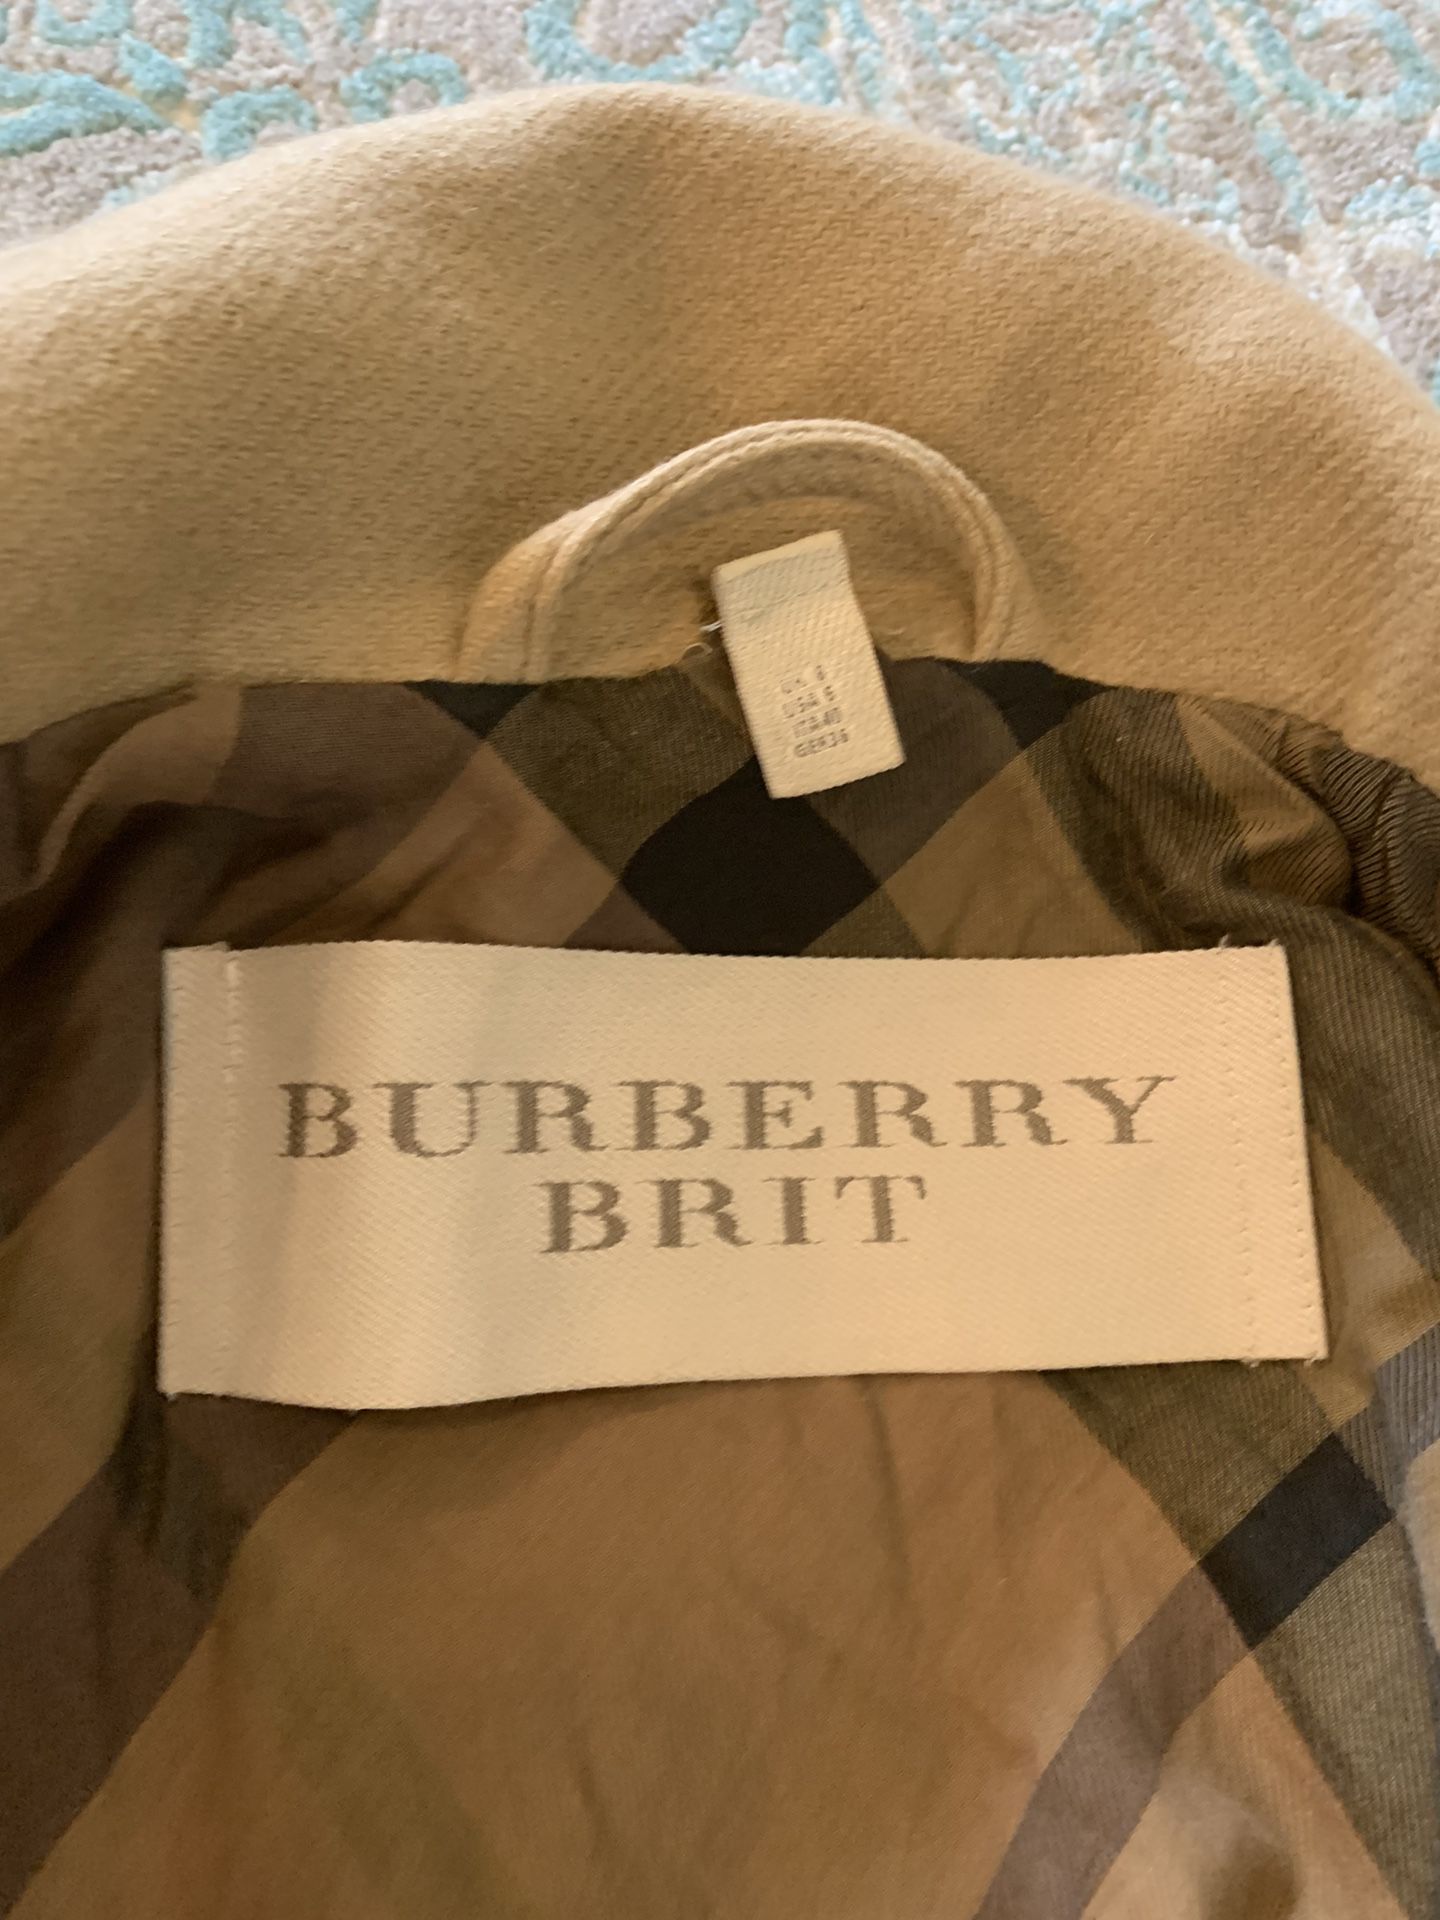 burberry cashmere coat